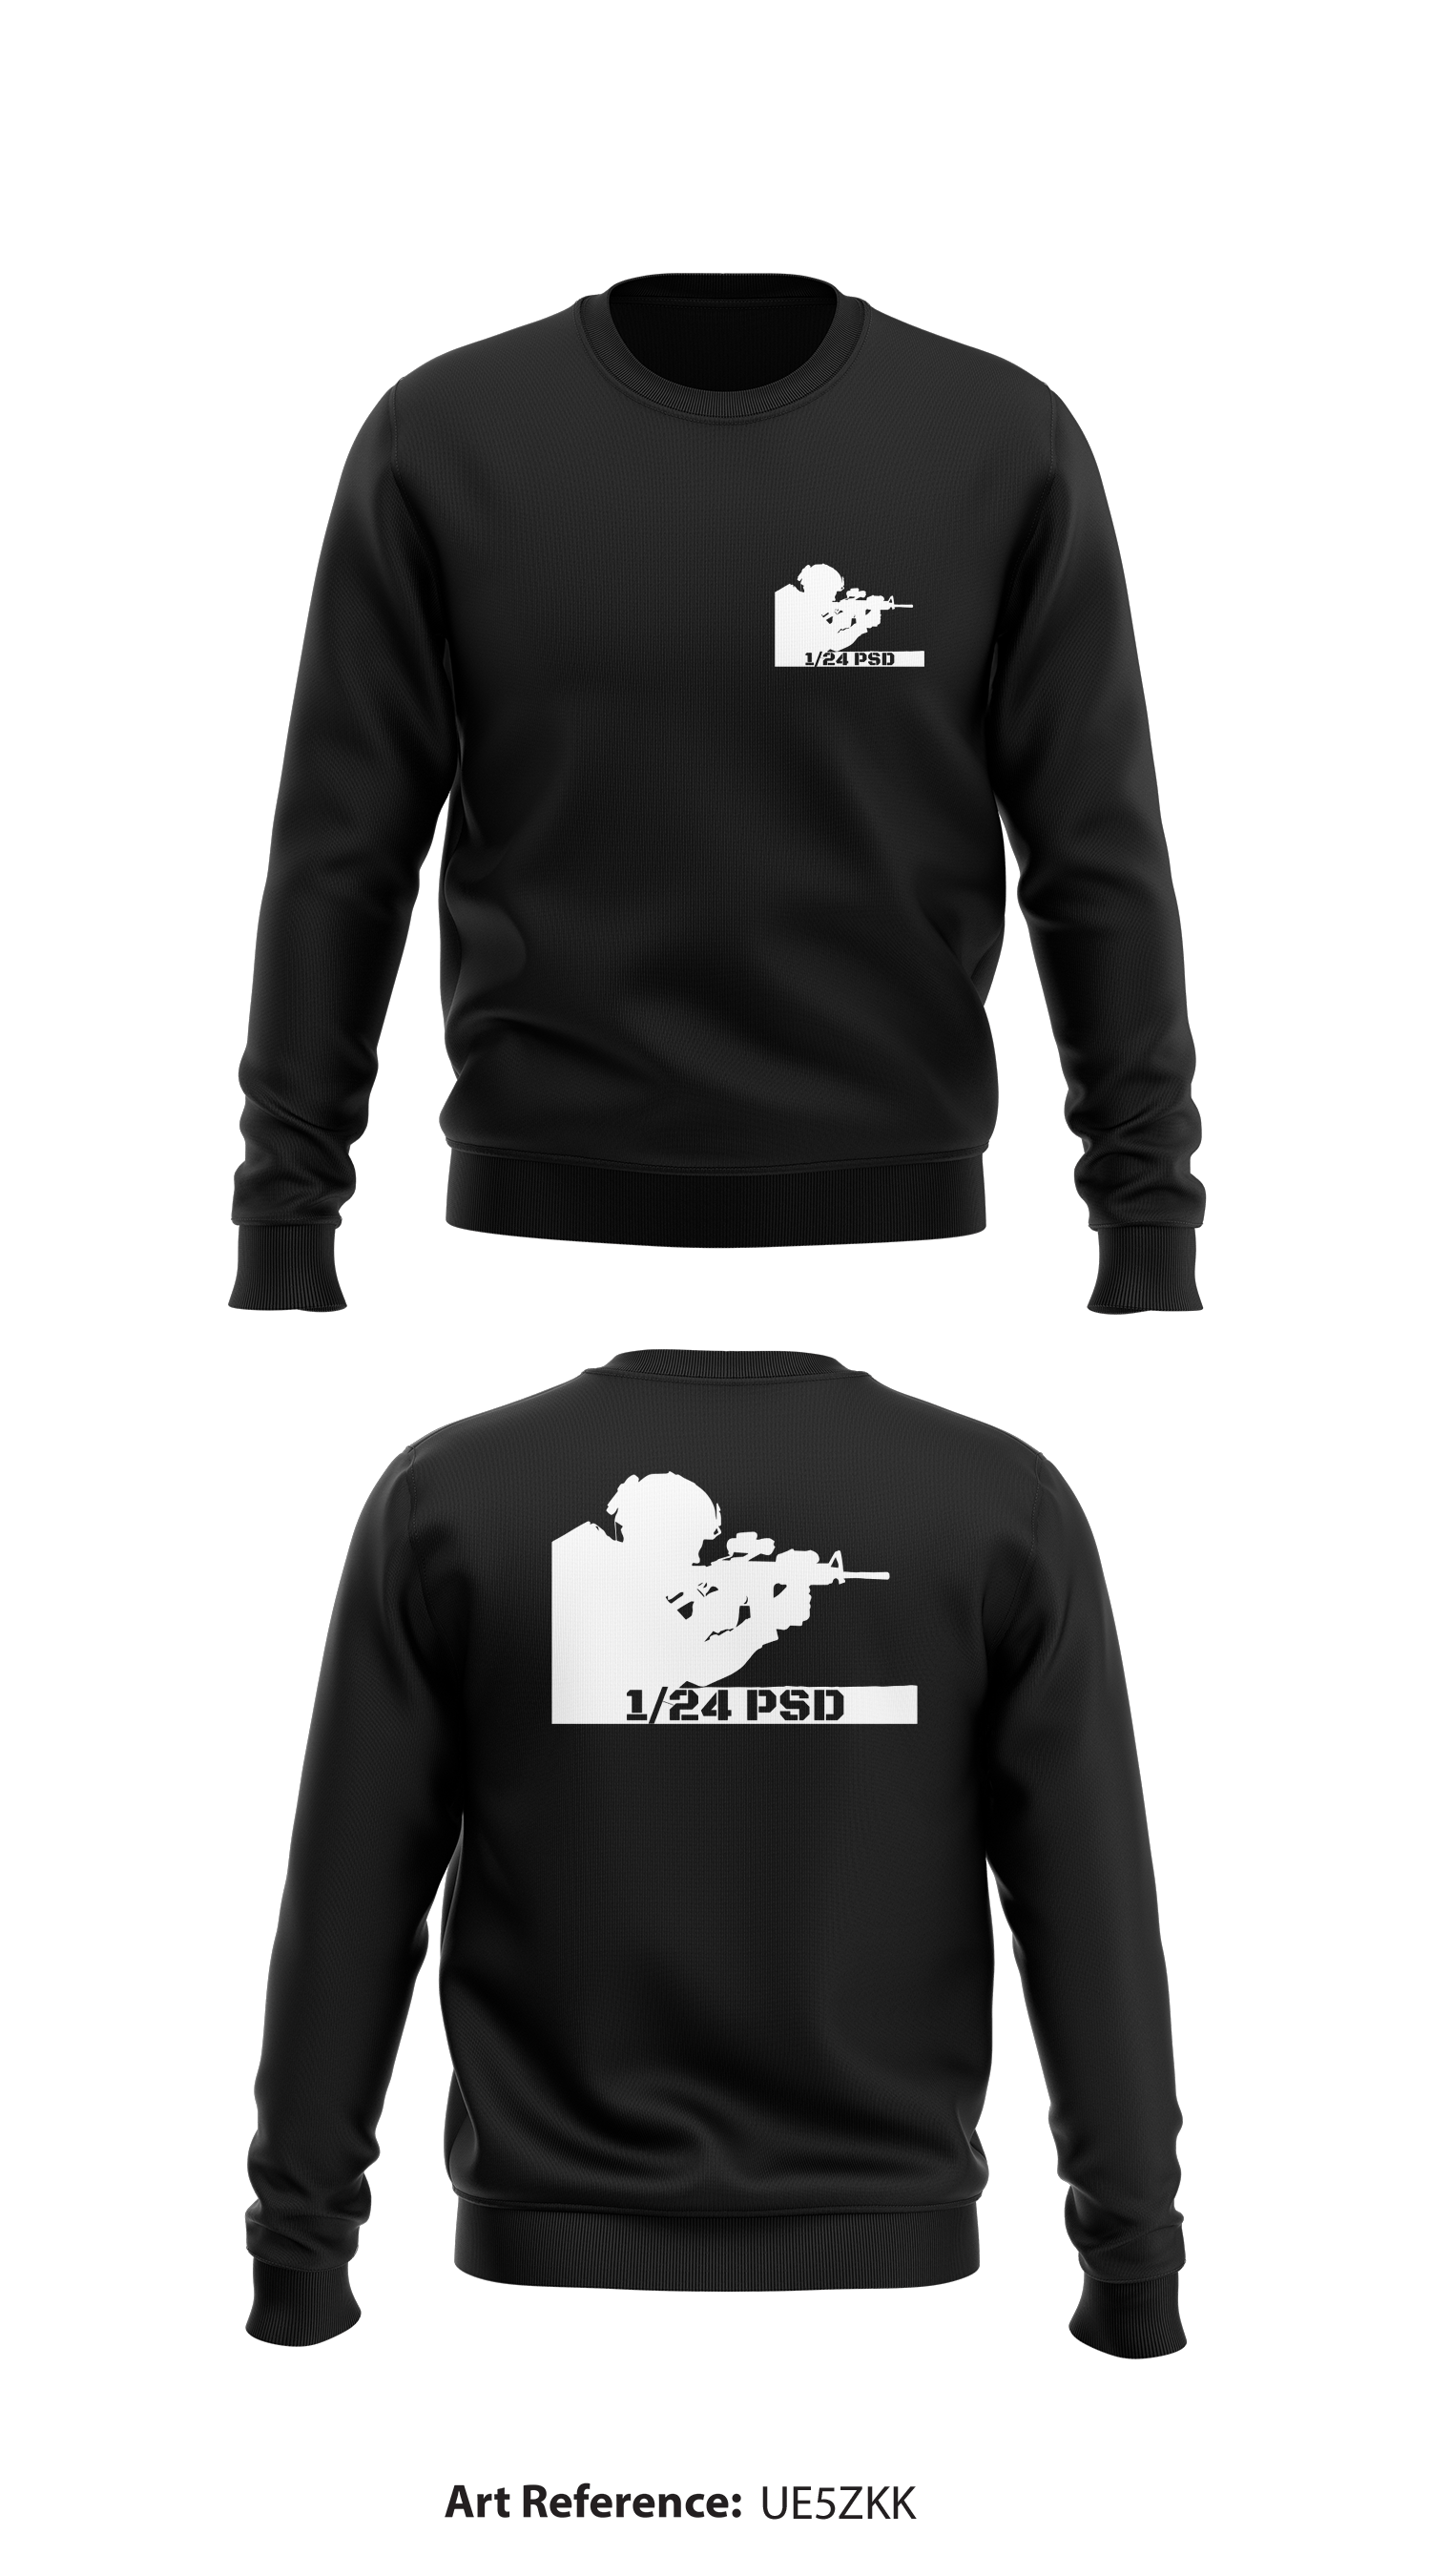 Download 1 24 Psd Store 1 Crew Neck Sweatshirt Ue5zkk Emblem Athletic